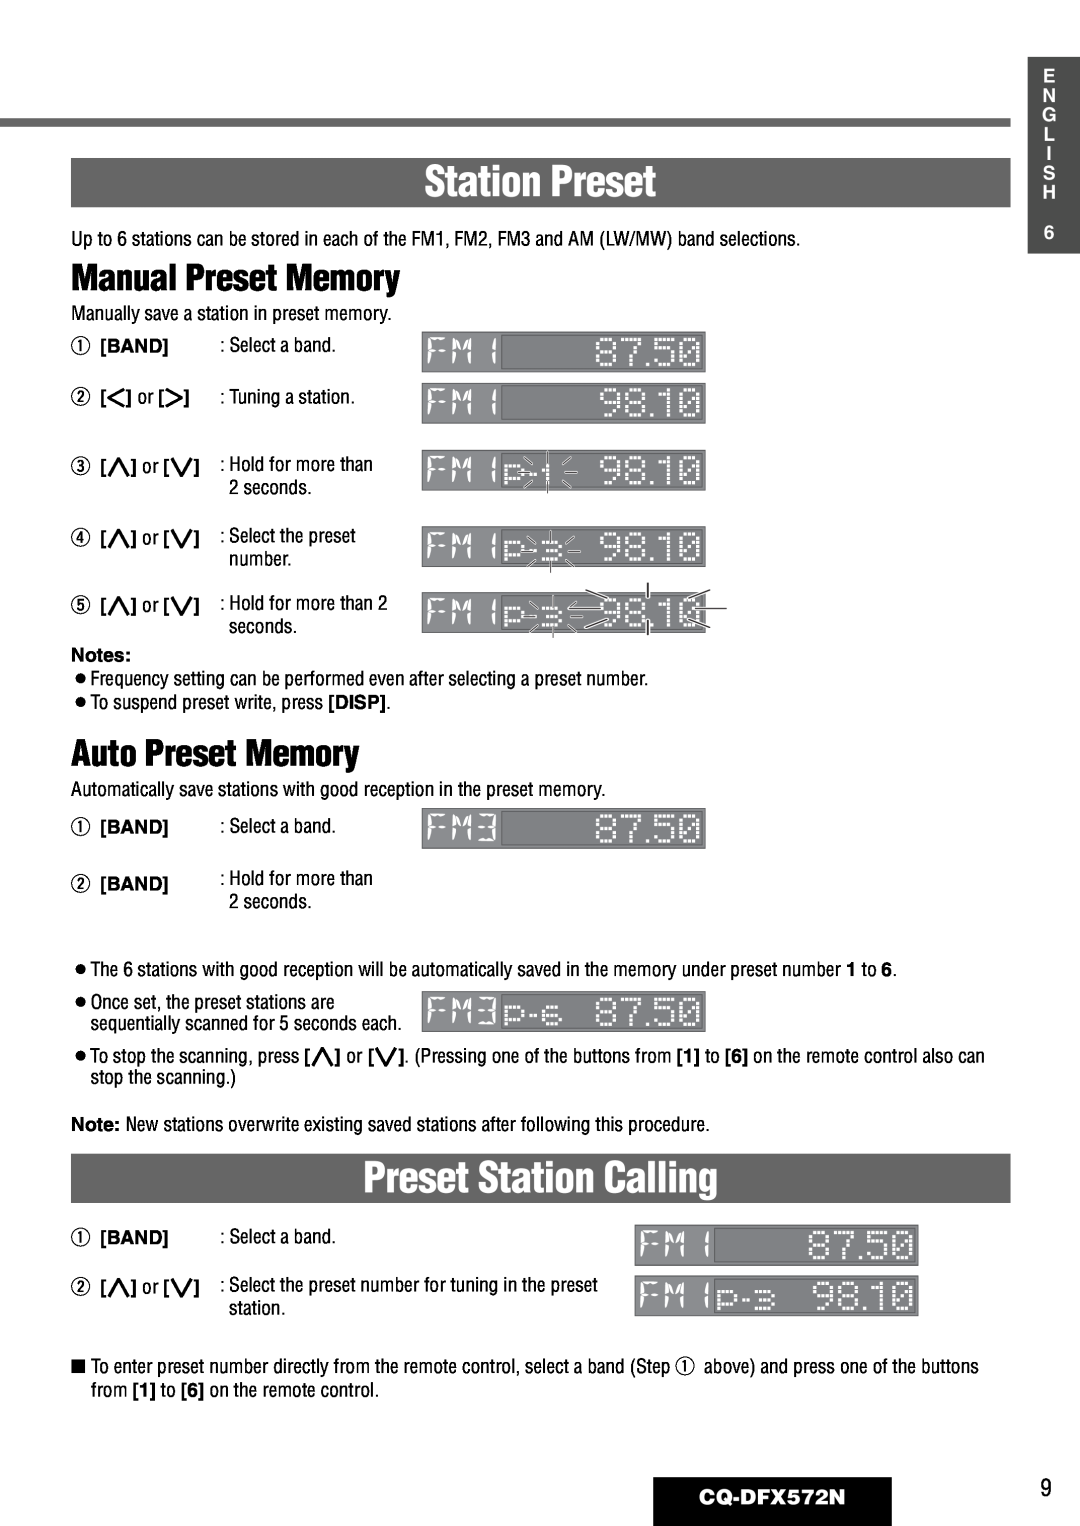 Panasonic Station Preset, Preset Station Calling, Manual Preset Memory, Auto Preset Memory, CQ-DFX572N9, E N G L I S H 